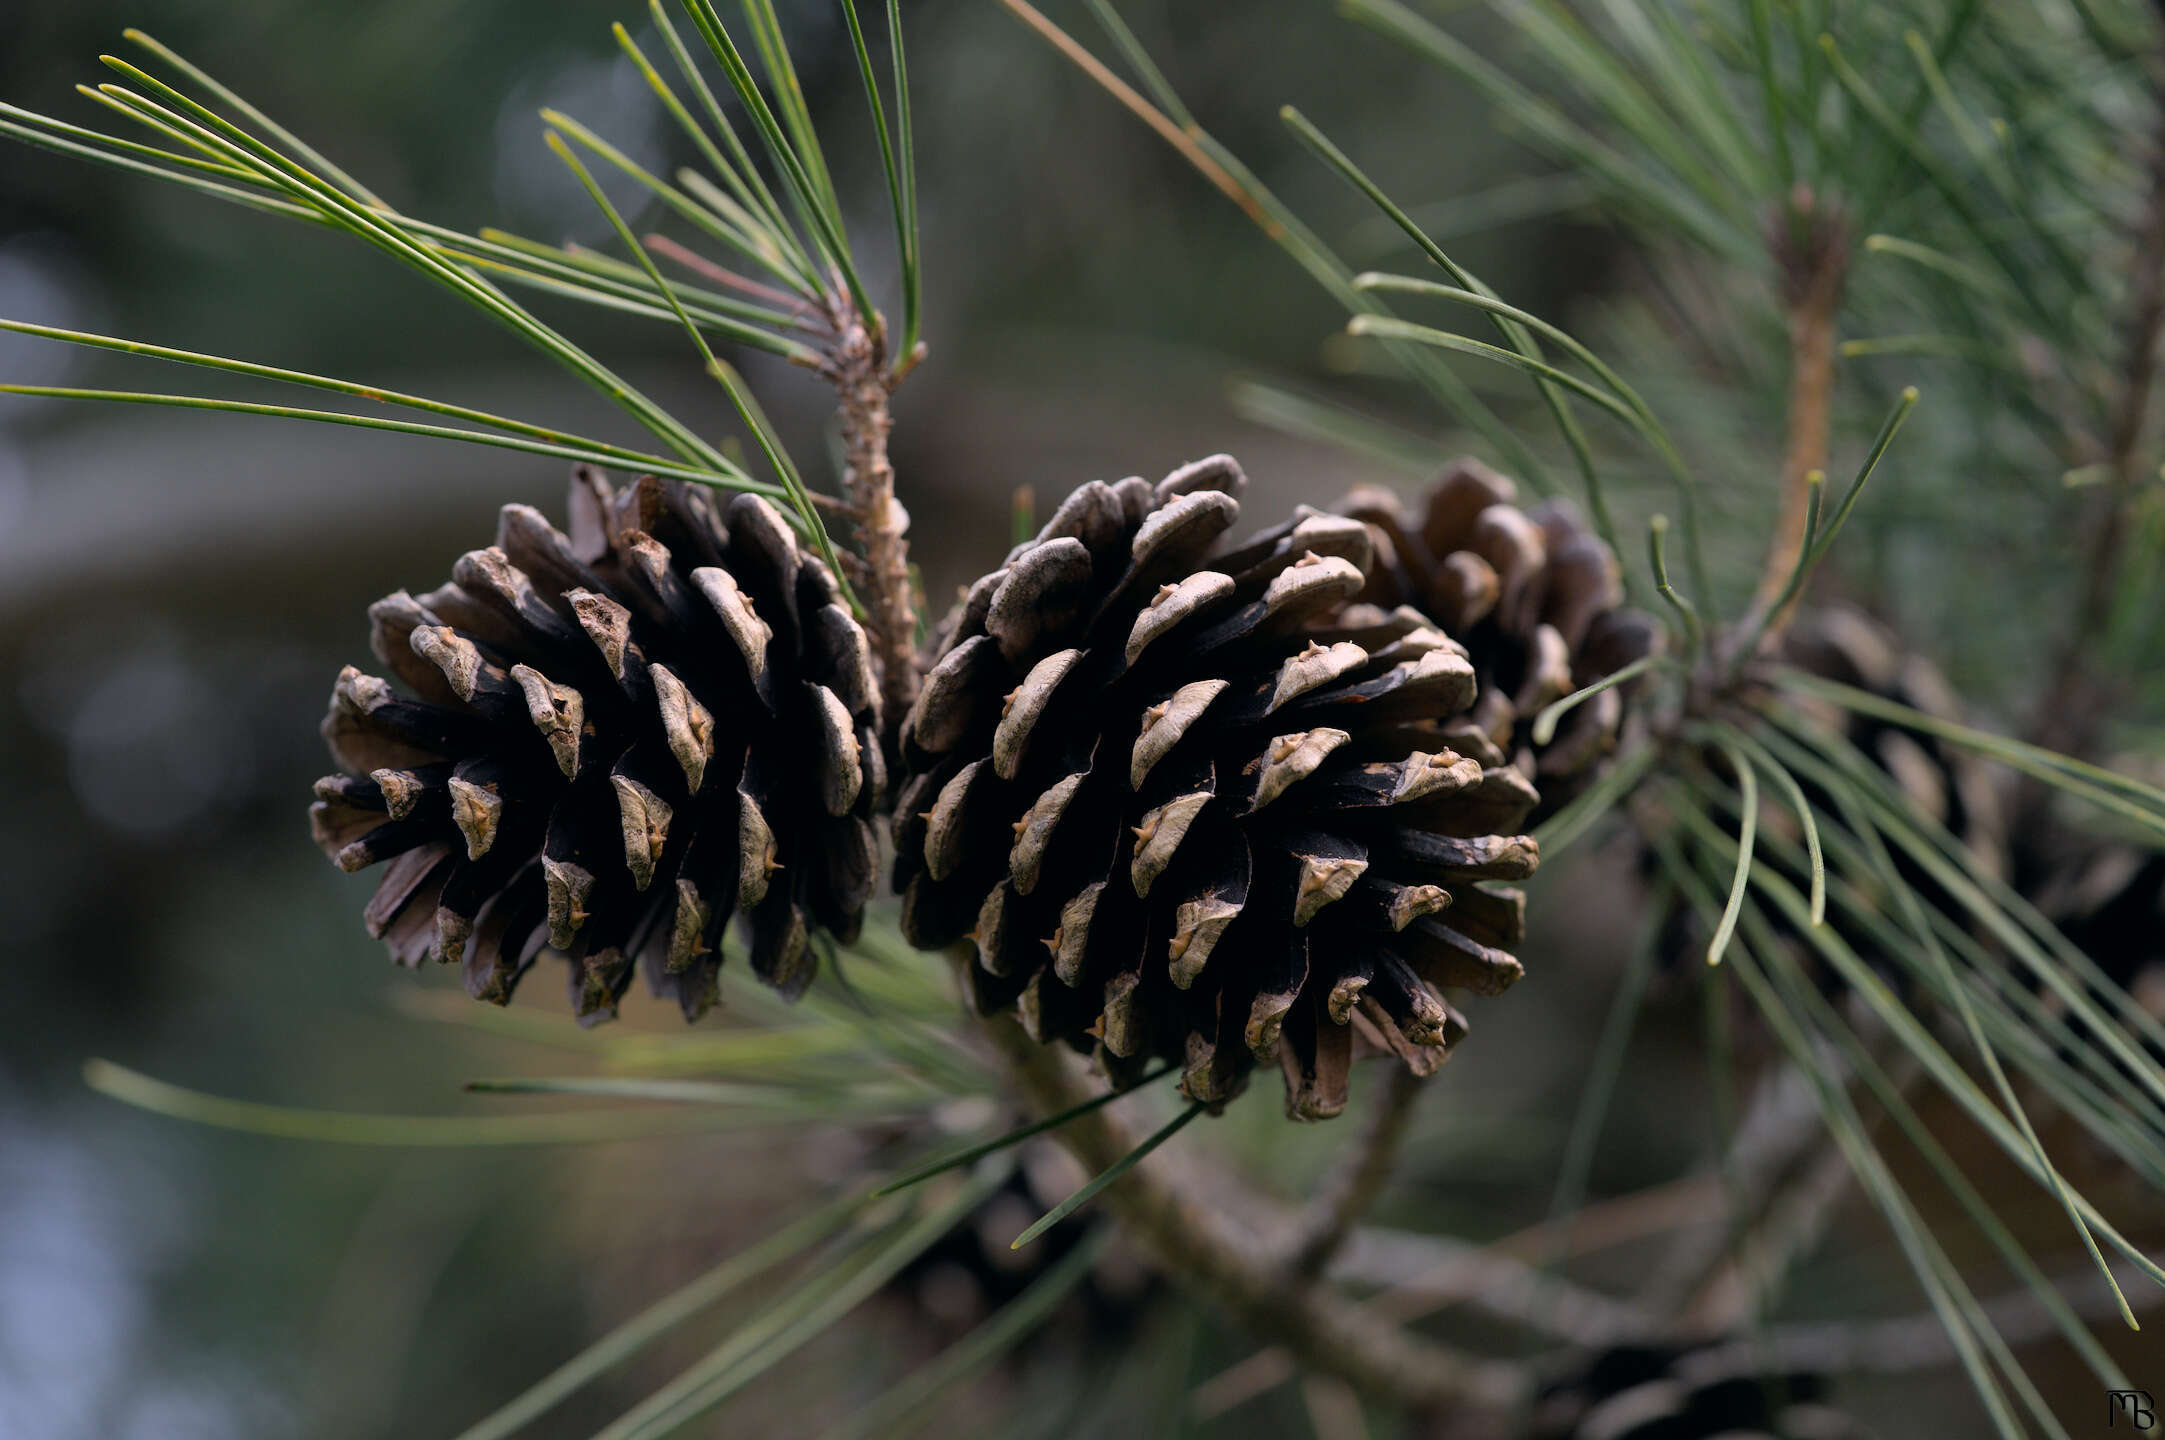 Pine cones in tree